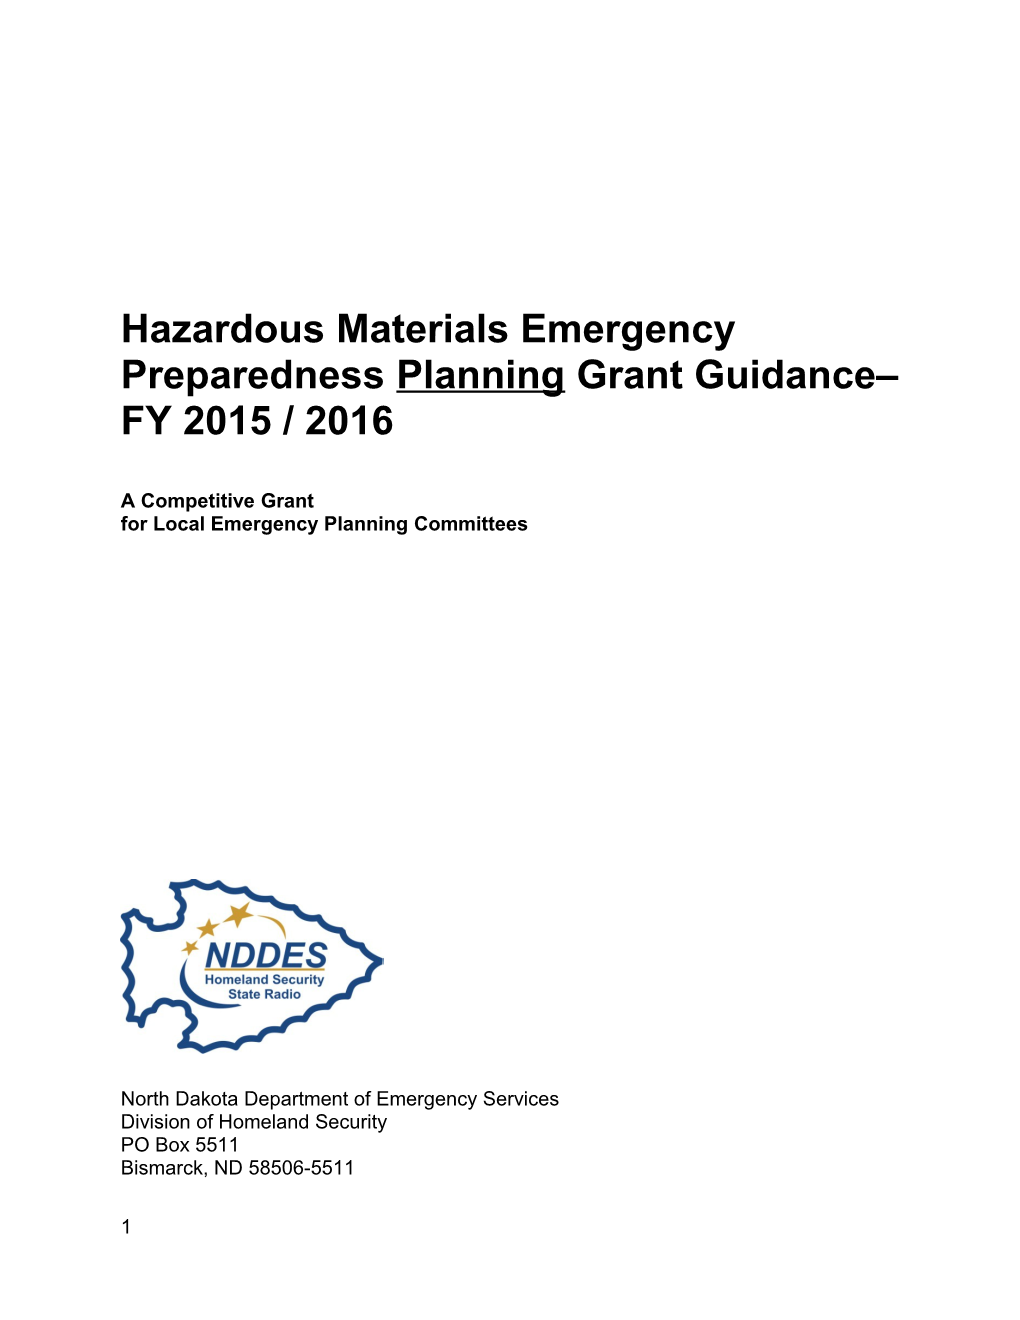 Hazardous Materials Emergency Preparedness Grant Program